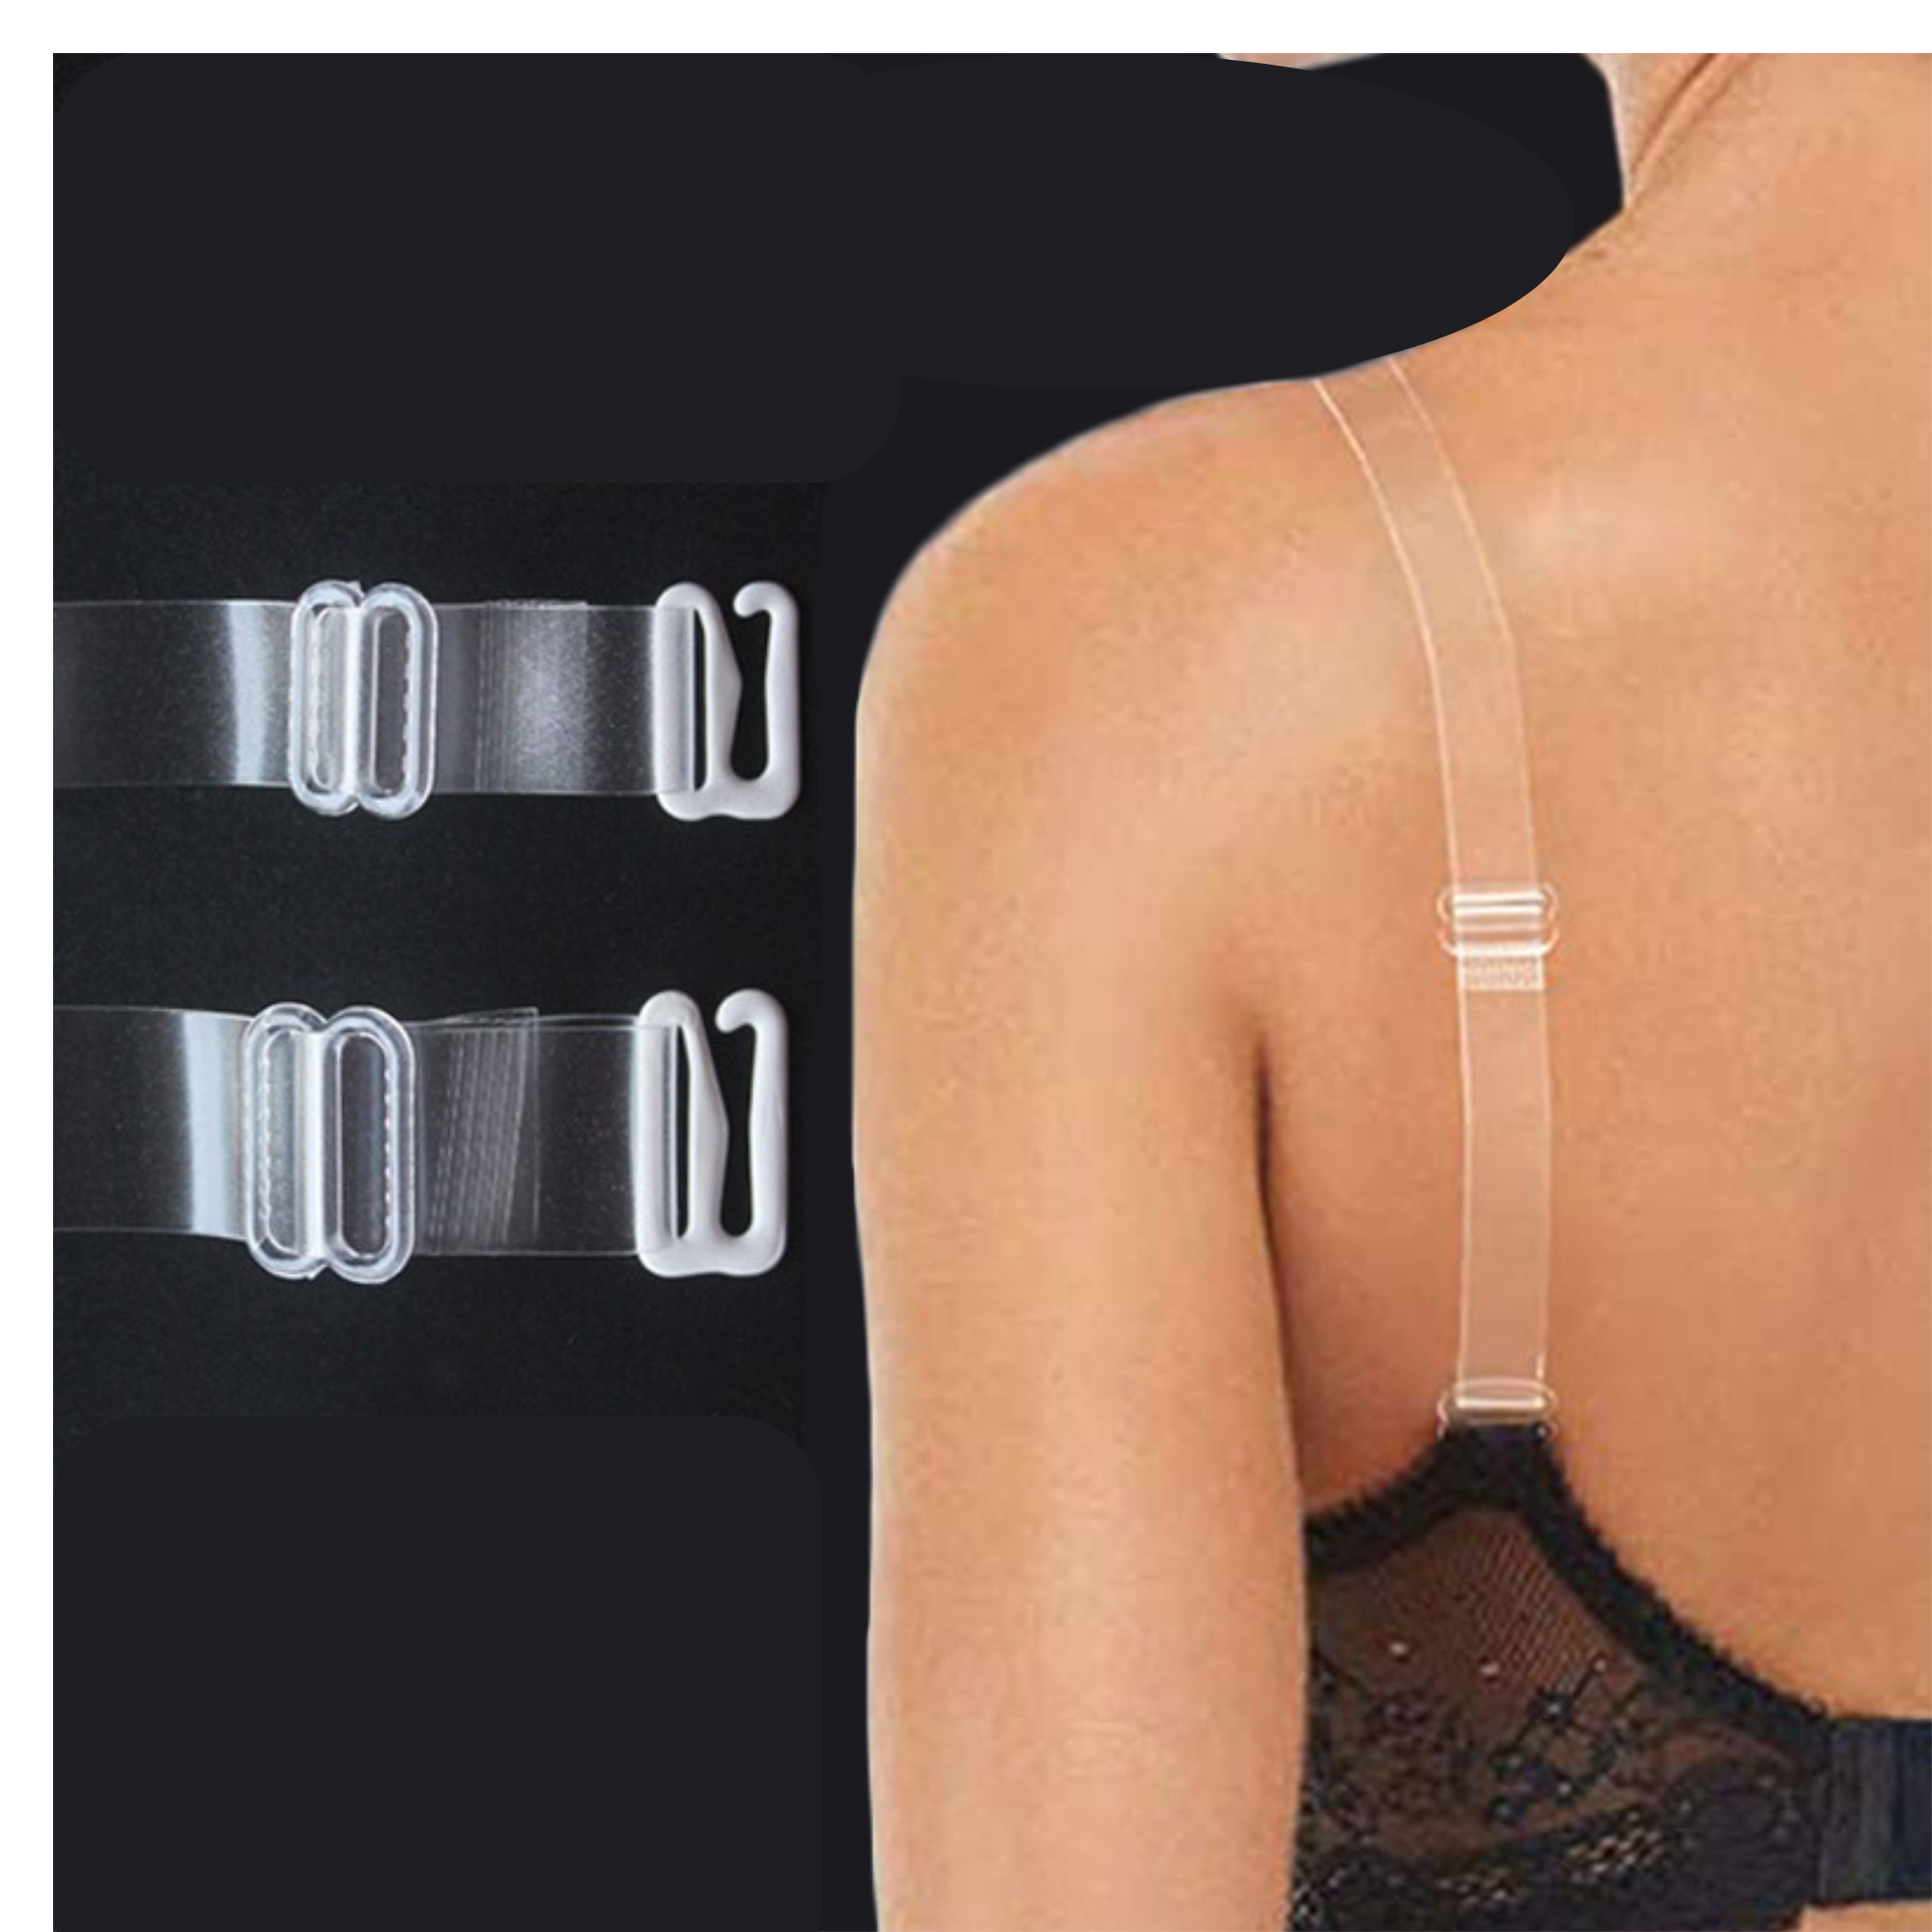 1pair Adjustable Invisible Transparent Clear Bra Accessories For Underwear  Shoulder Straps Intimates Silicone Bra Straps